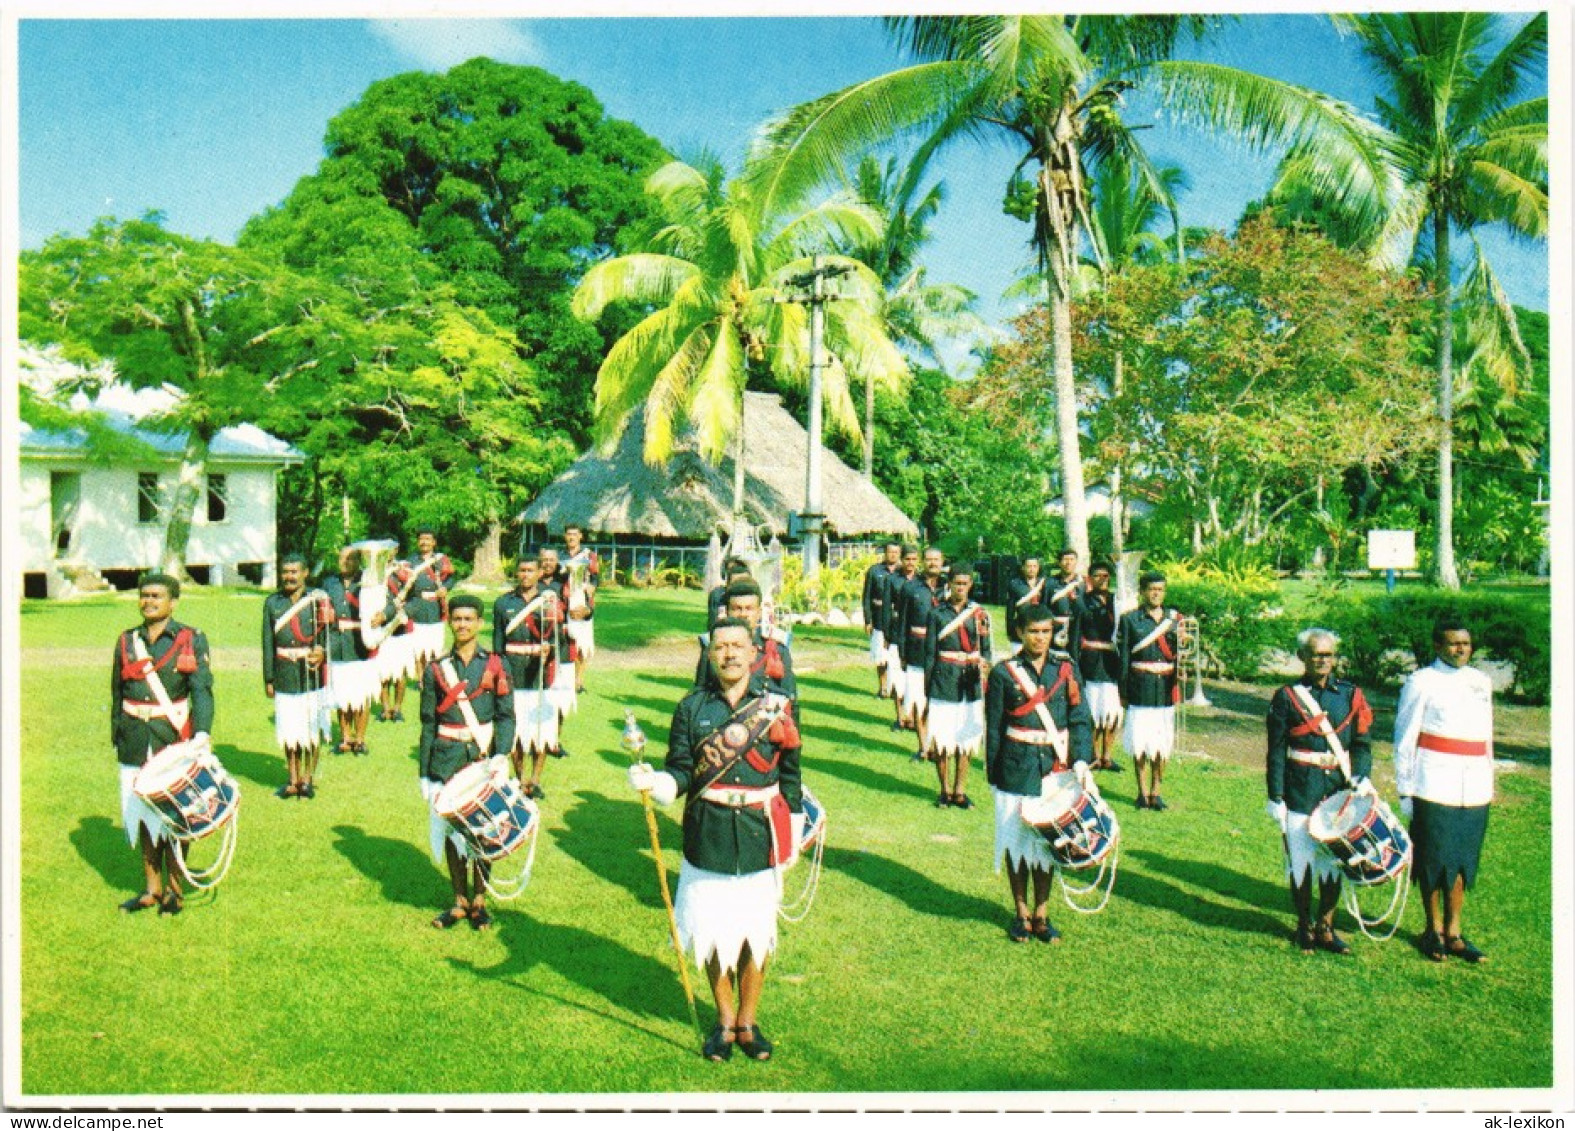 Fiji (Fidschi-Inseln)  THE ROYAL FIJI POLICE BAND Polizei  Fidschi-Inseln 1980 - Fiji